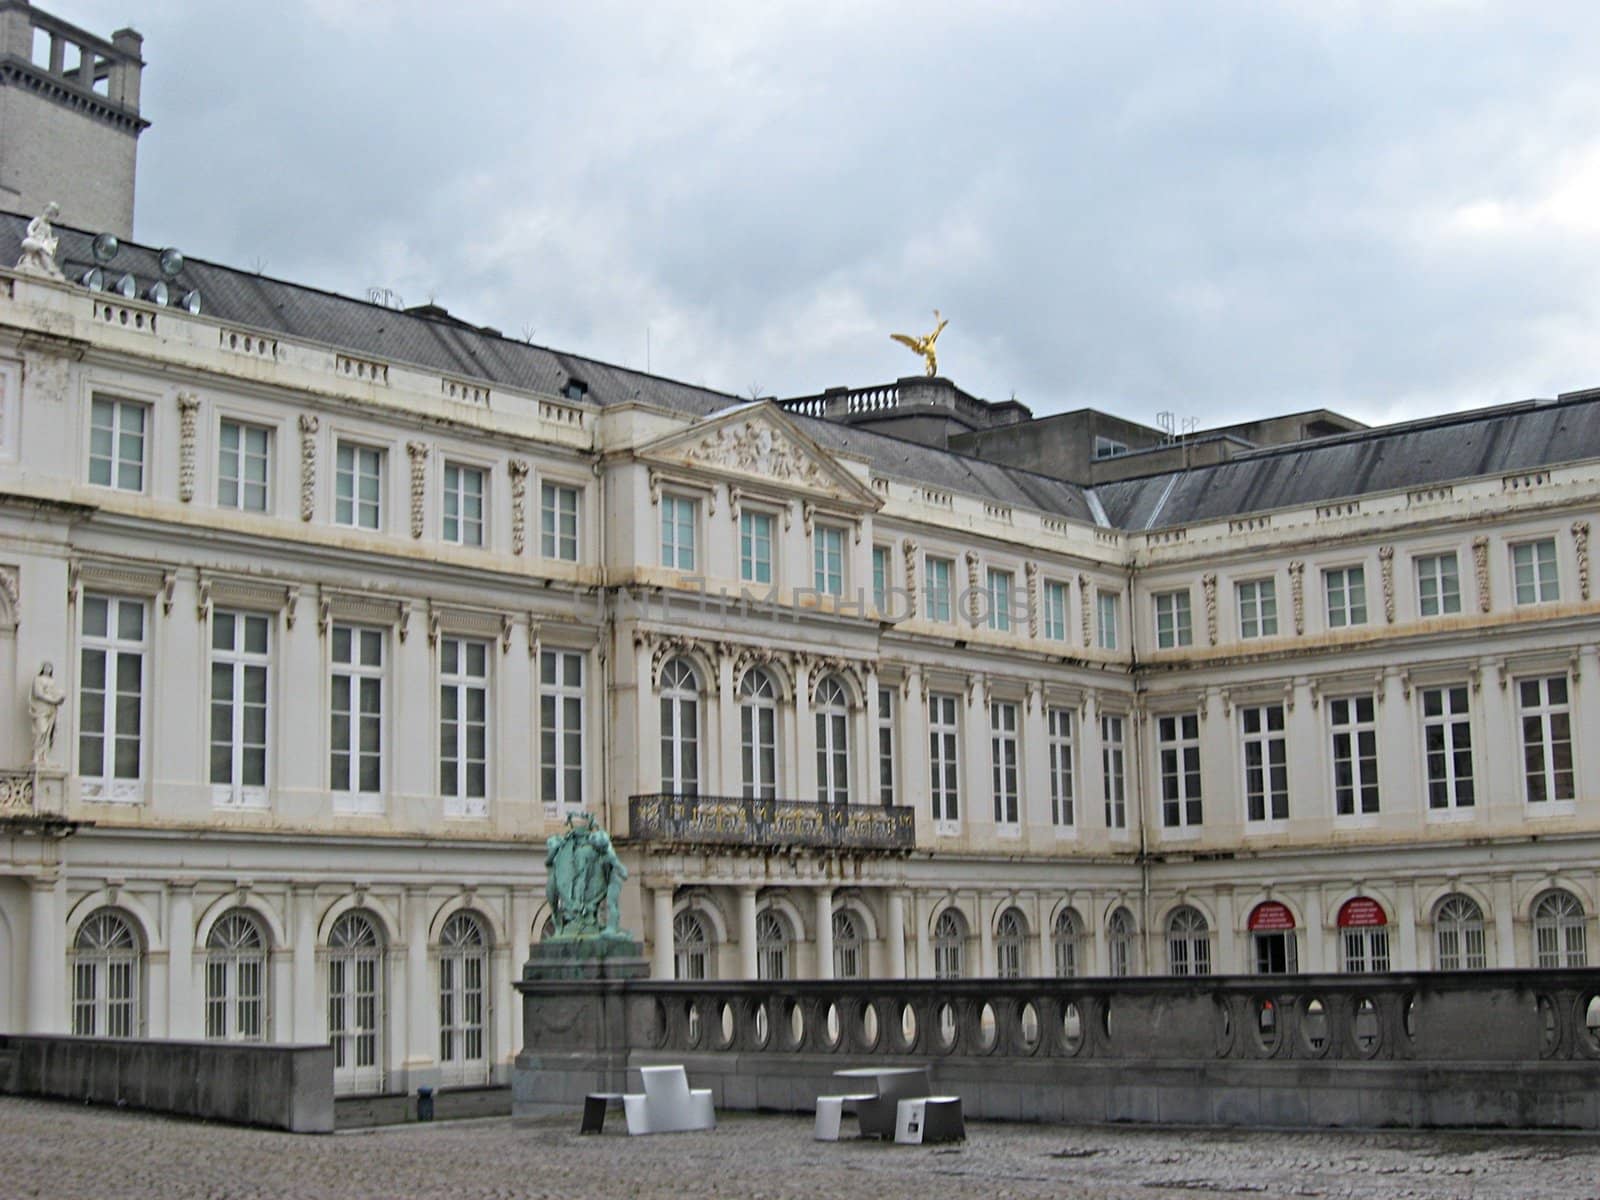 Palace of Charles de Lorraine in Brussels in Belgium